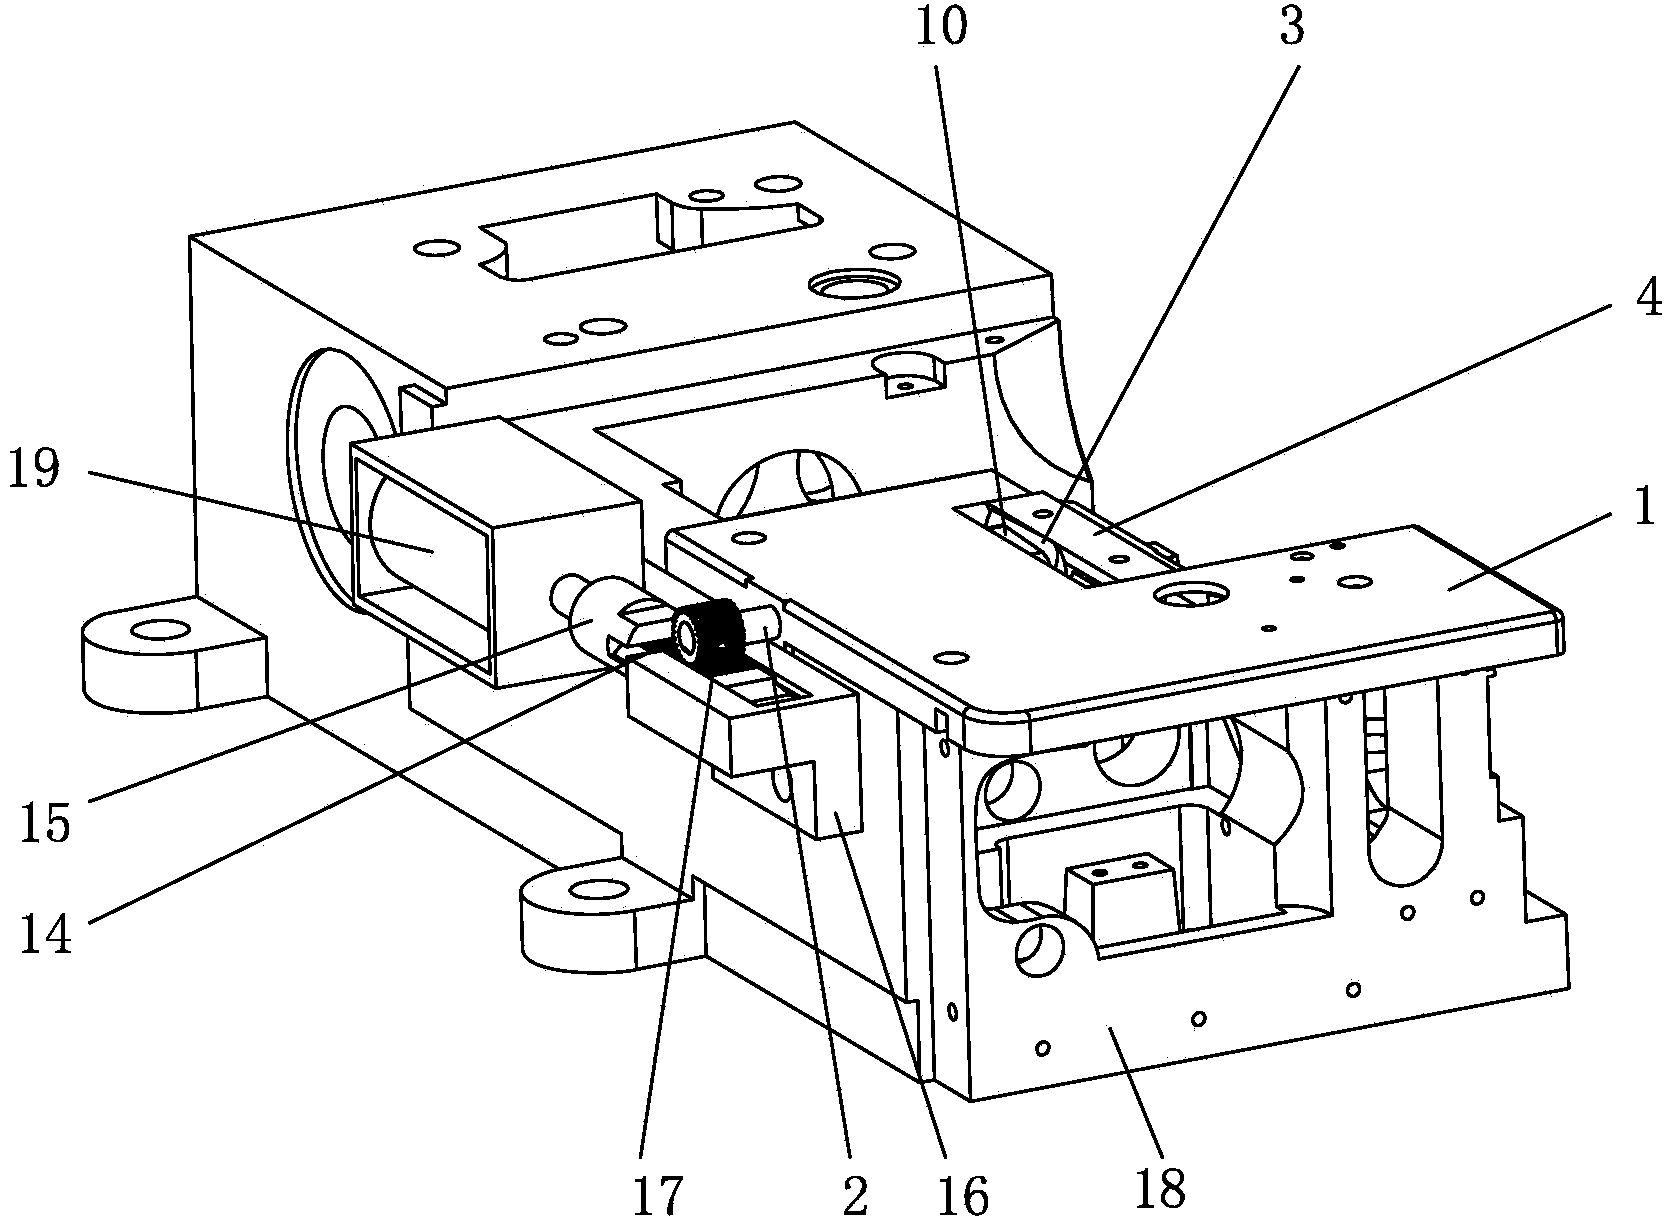 Novel cloth strip cutting mechanism